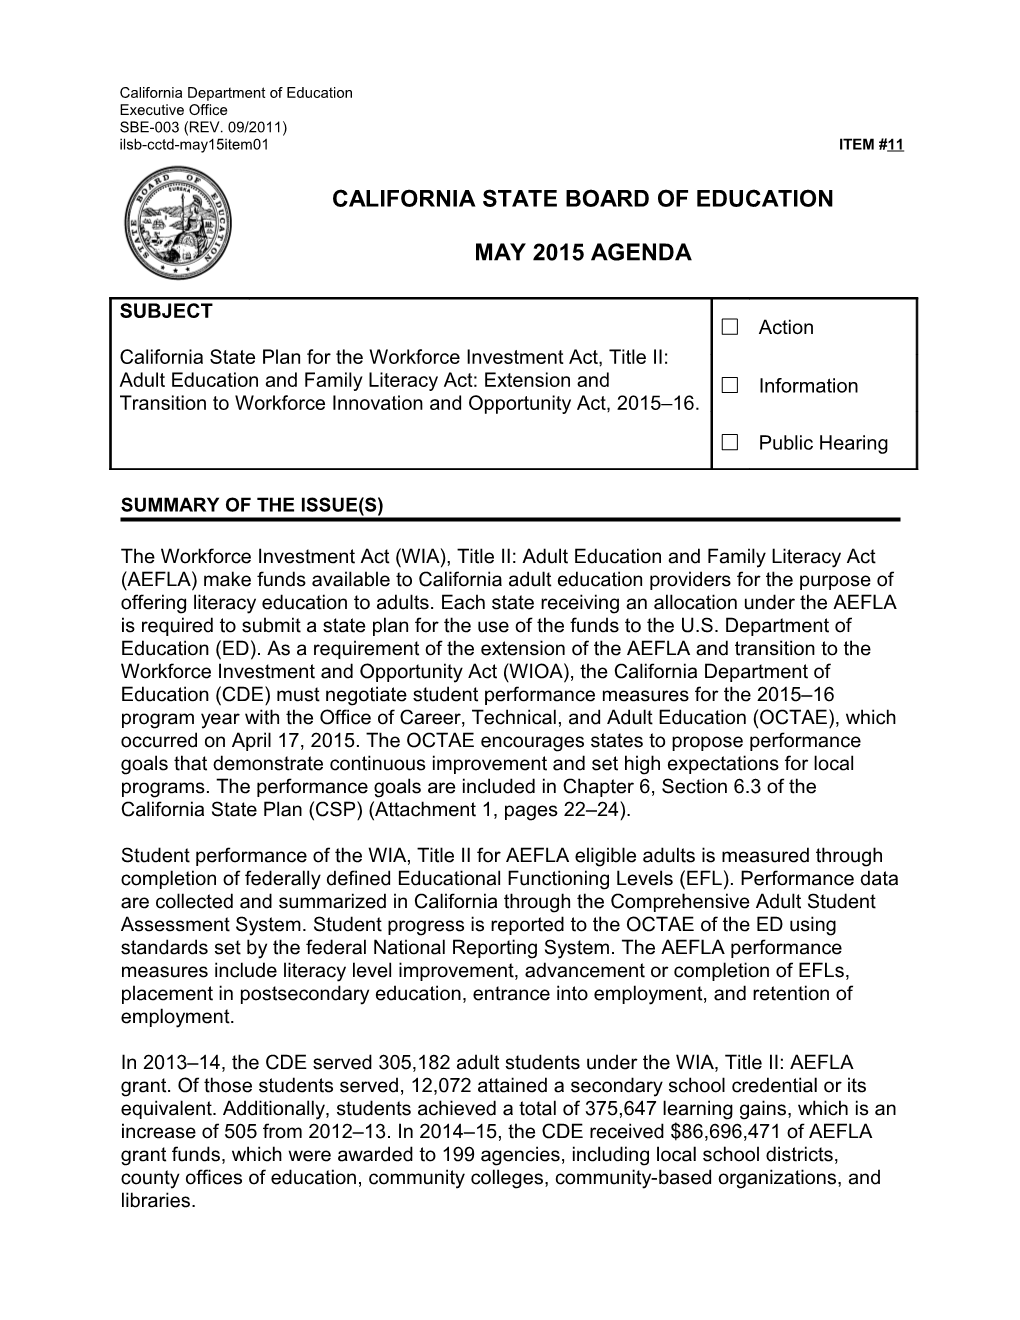 May 2015 Agenda Item 11 - Meeting Agendas (CA State Board of Education)